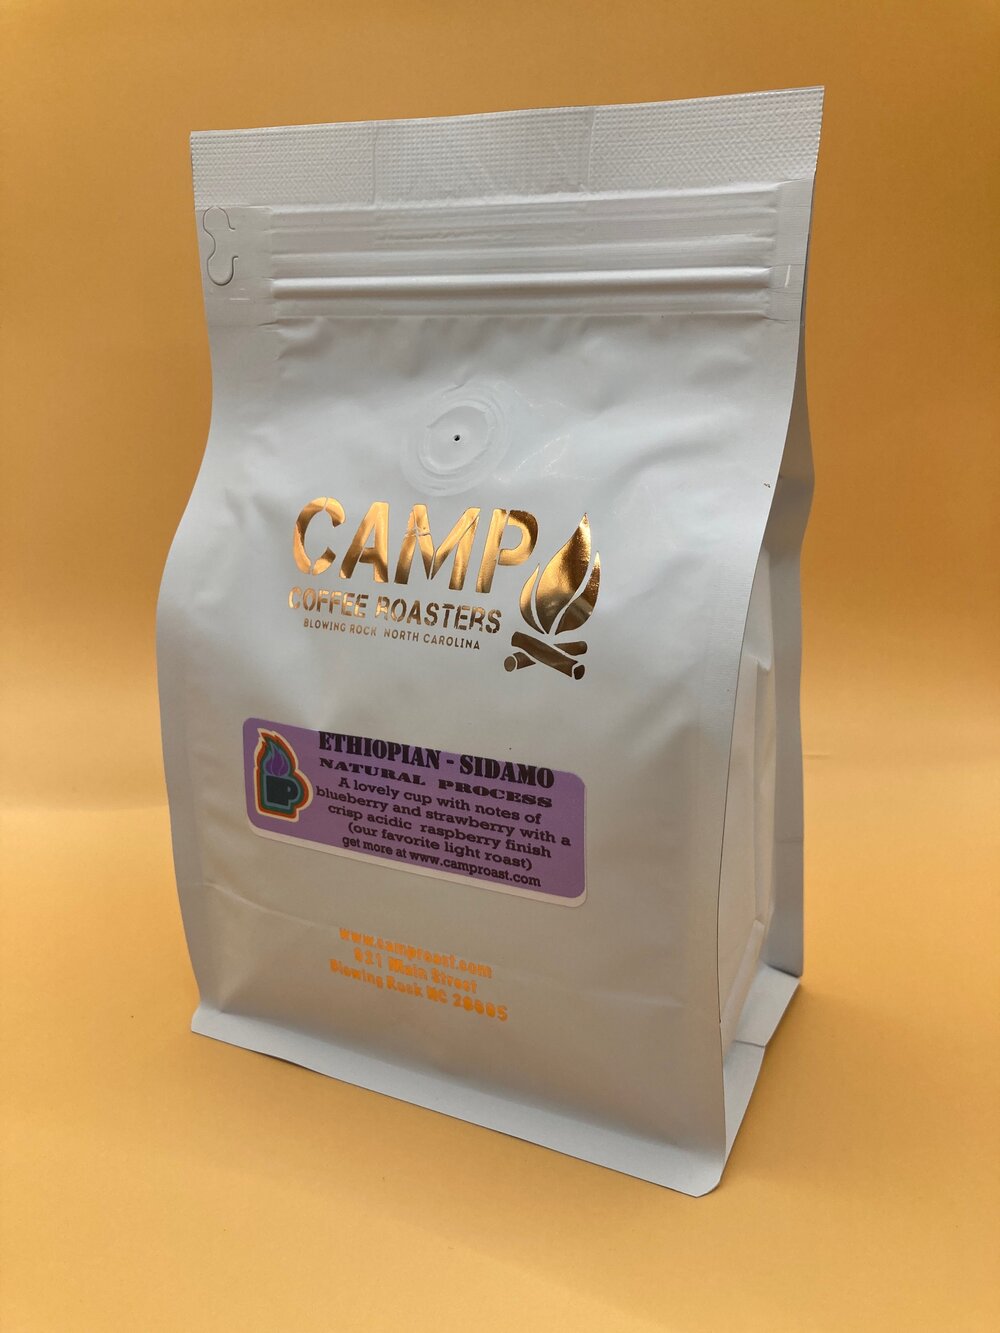 Campfire Coffee Bag